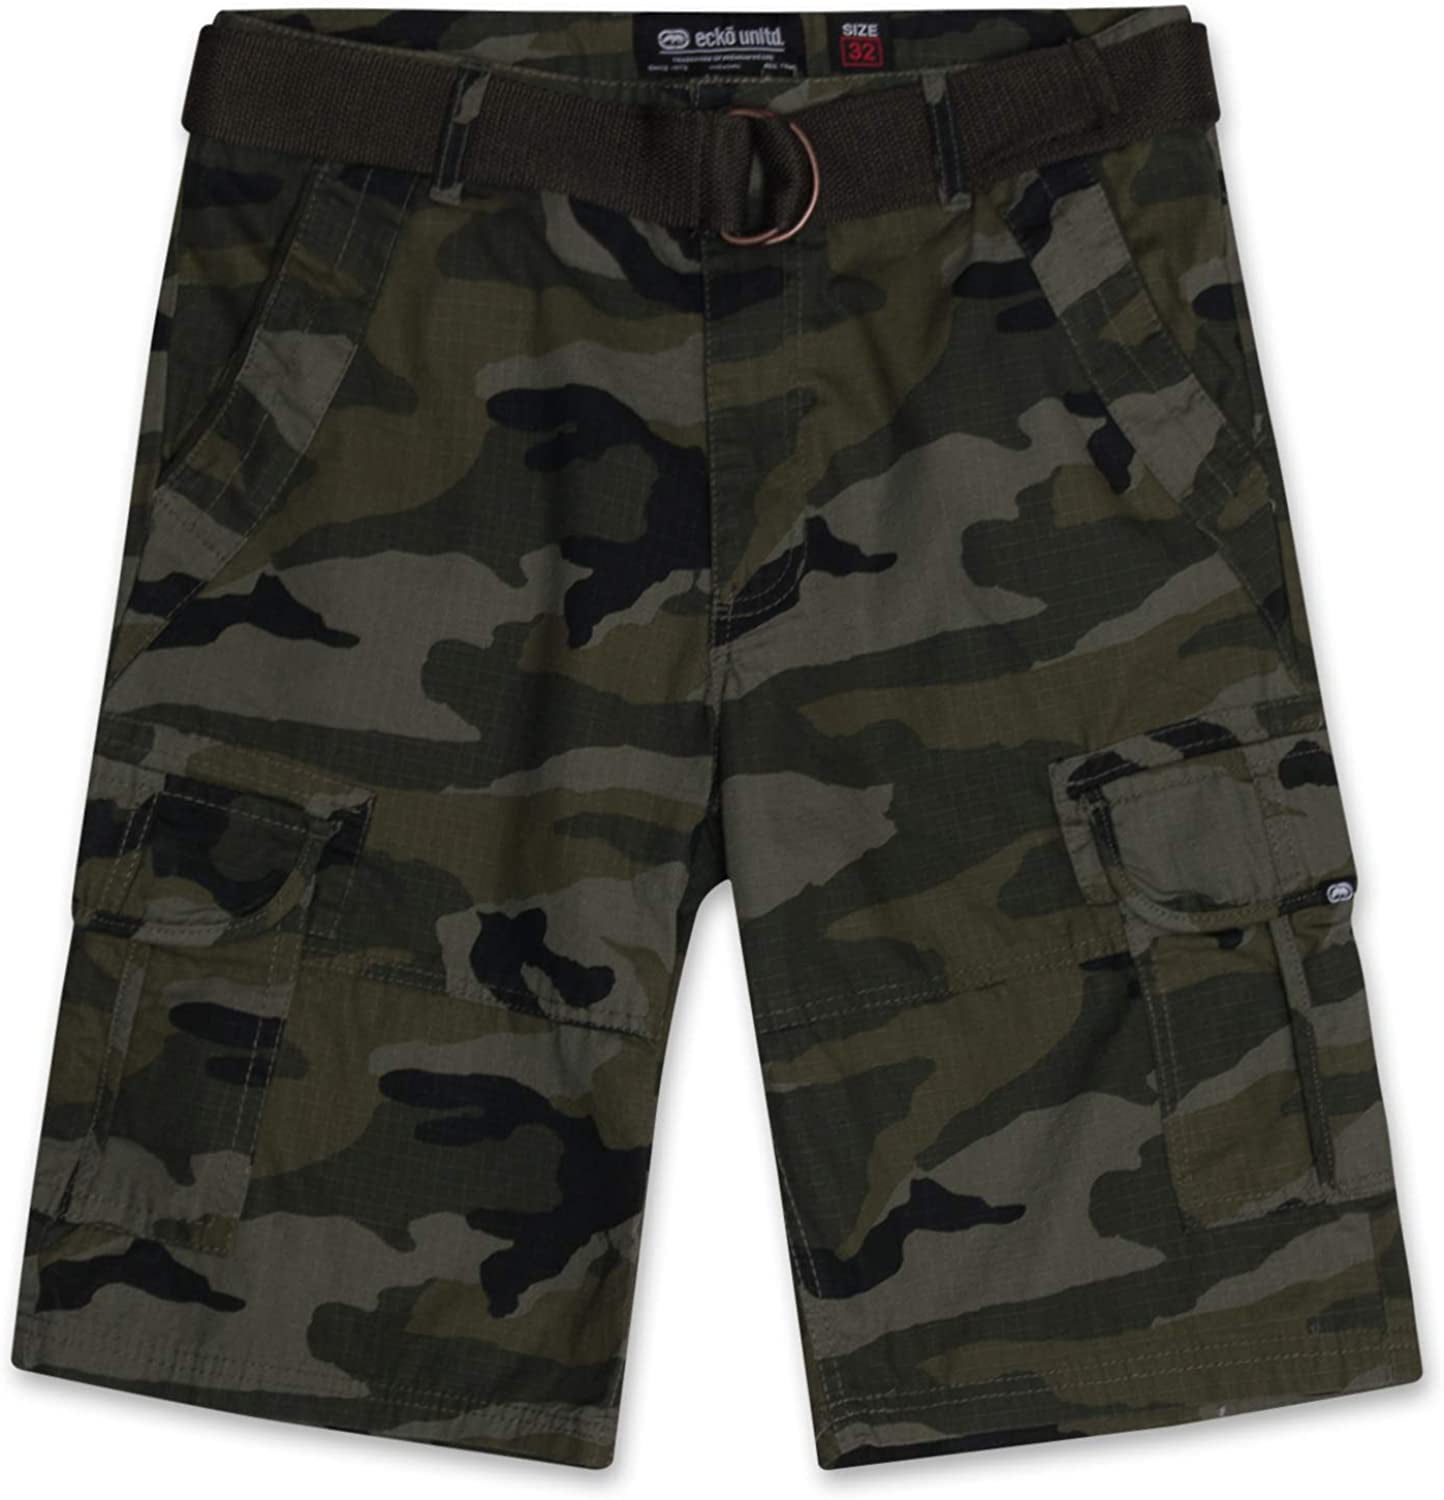 Shorts for Men Ecko Unltd Ripstop Cargo Shorts for Men Big and Tall Shorts w Belt 